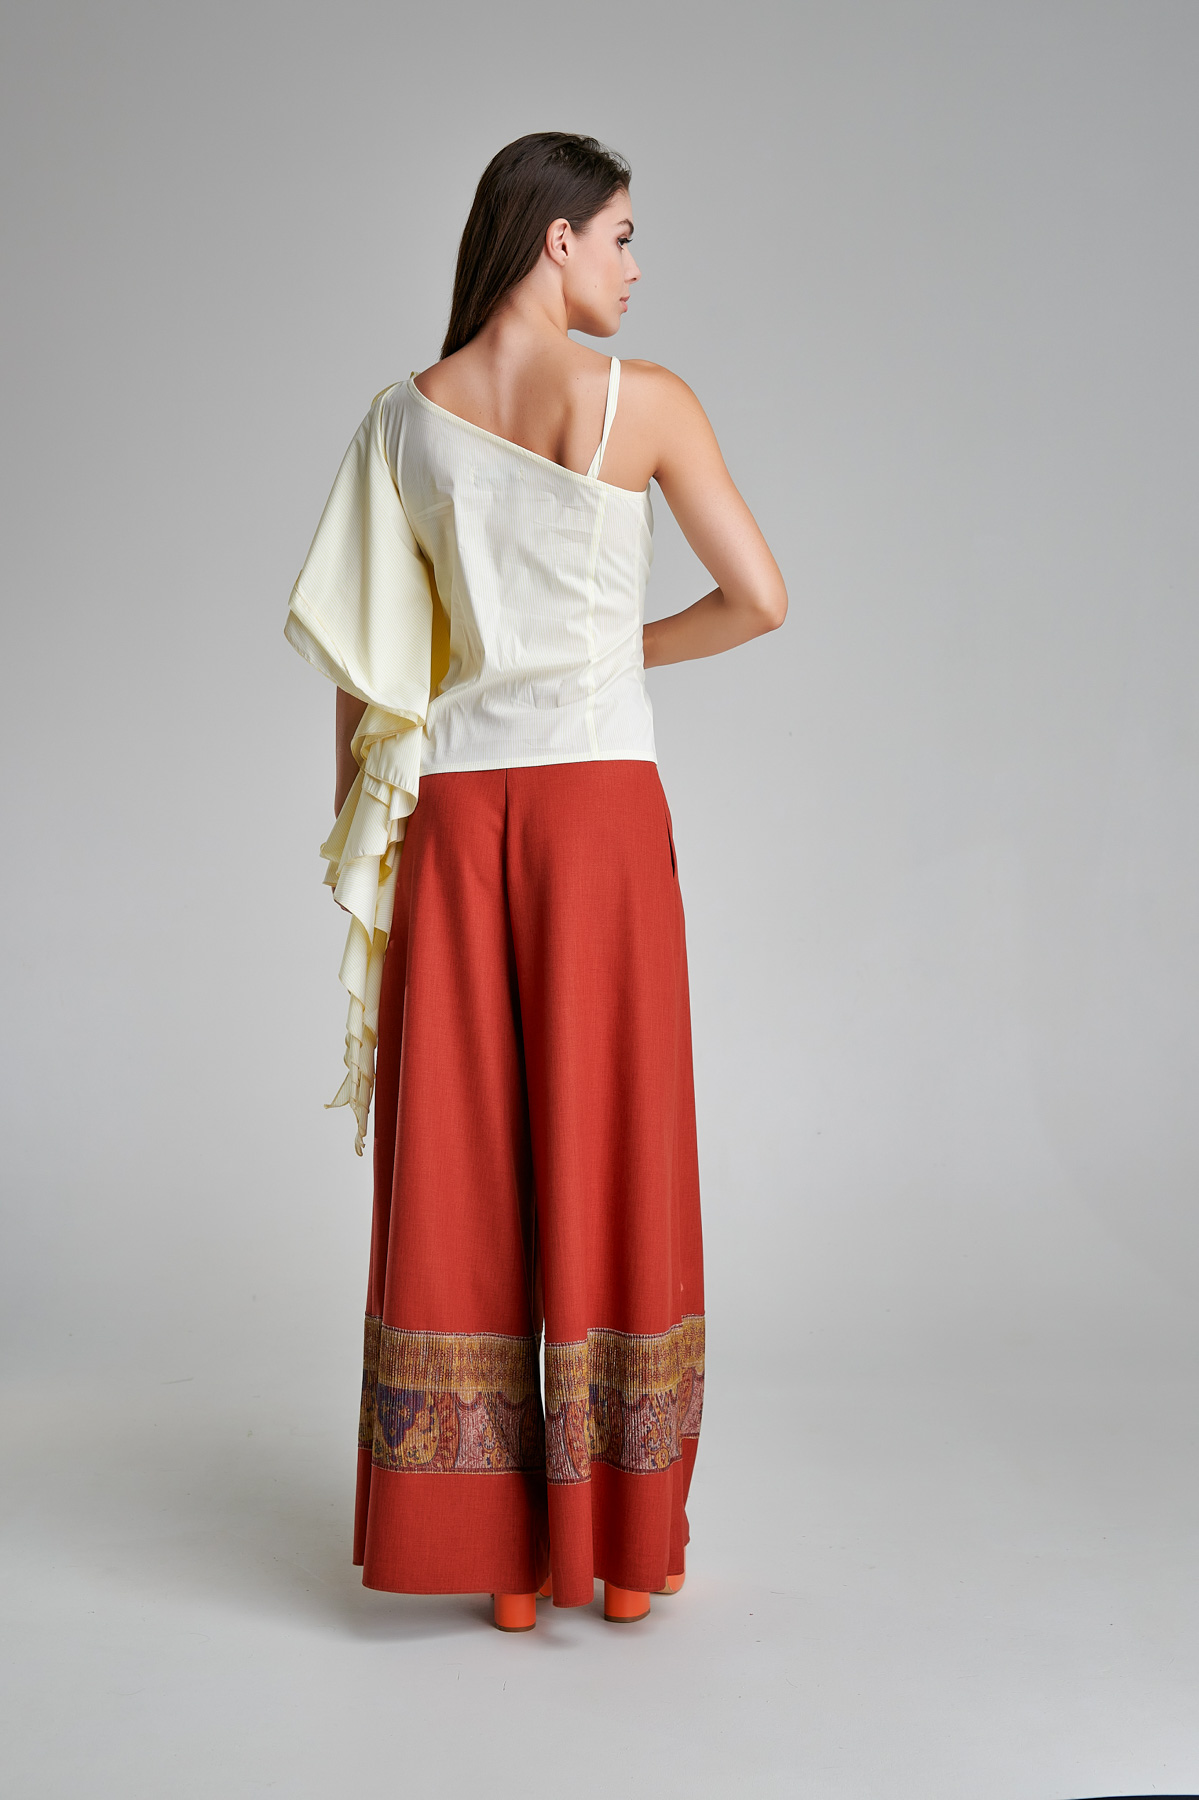 ISLA yellow ruffle blouse and thin strap. Natural fabrics, original design, handmade embroidery